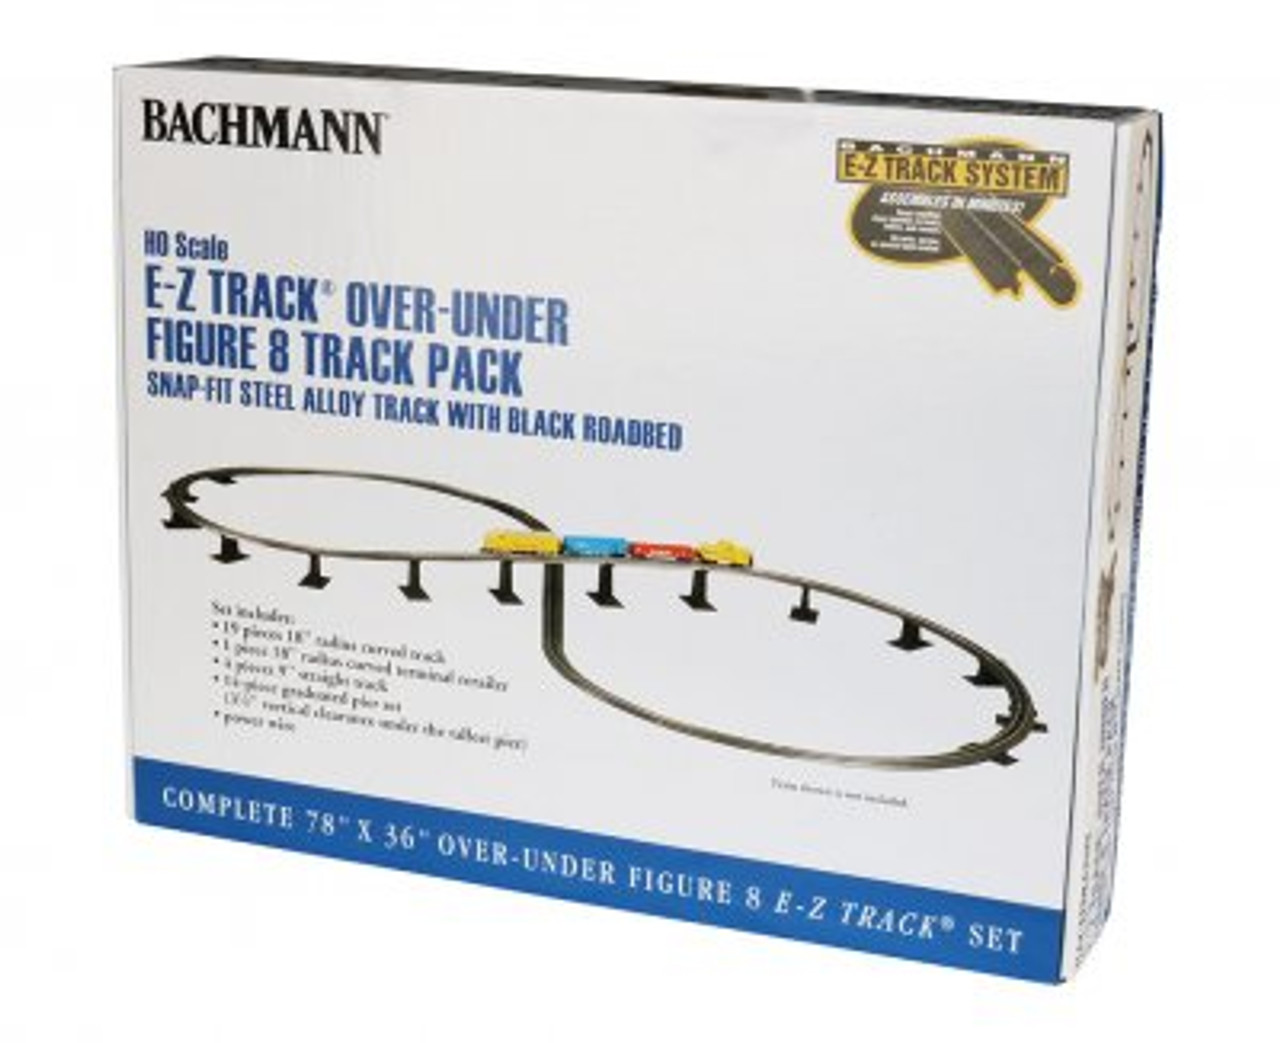 Bachmann 44475 HO E-Z Track Steel Alloy Over-Under Figure 8 Track Pack